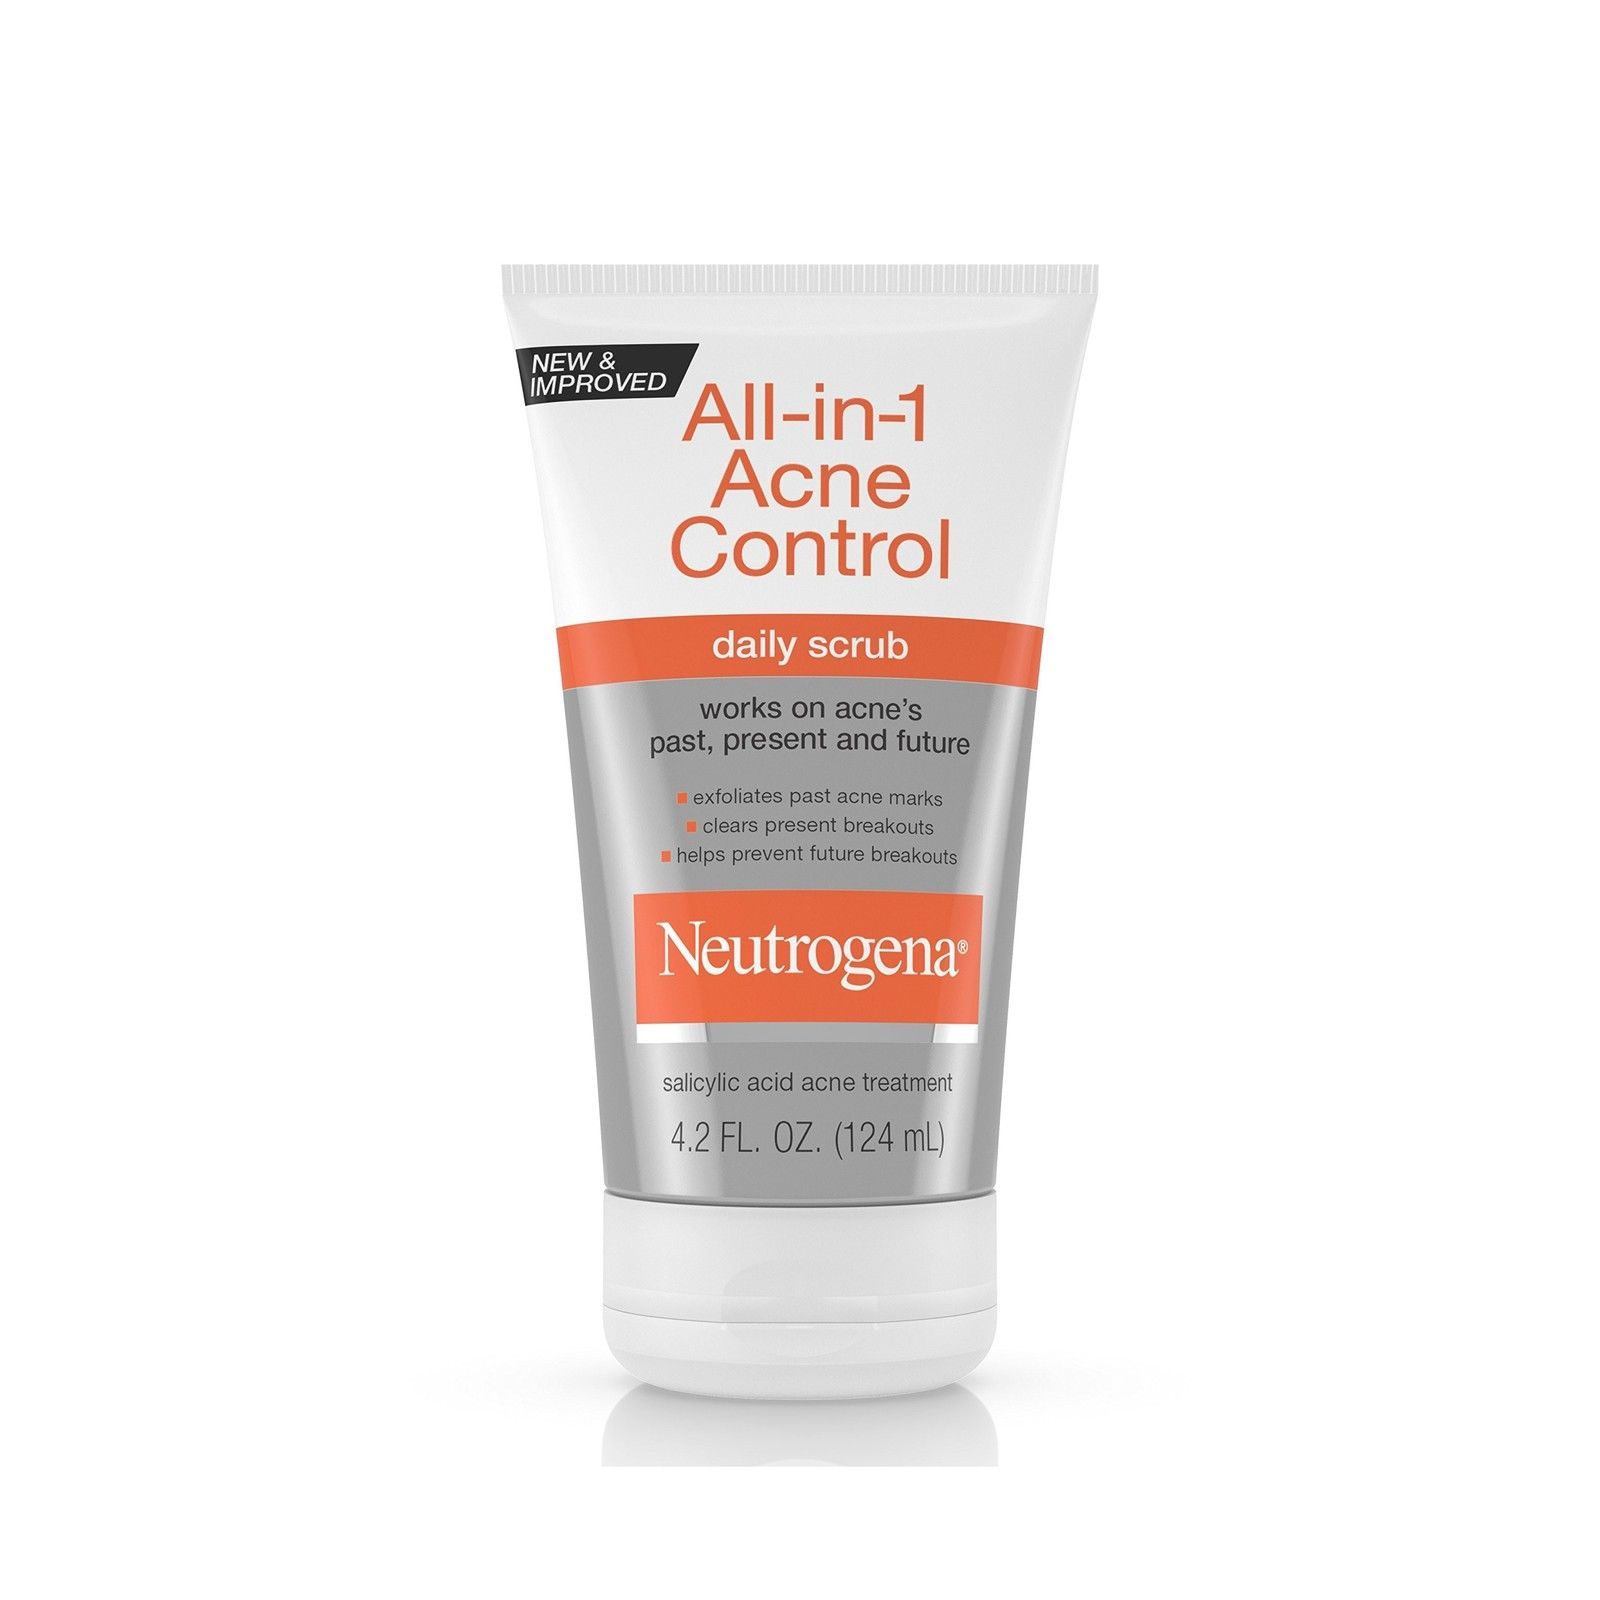 Neutrogena All-In-1 Acne Control Daily Scrub Acne Treatment 4.2 Fl. Oz. - NEW - $30.45